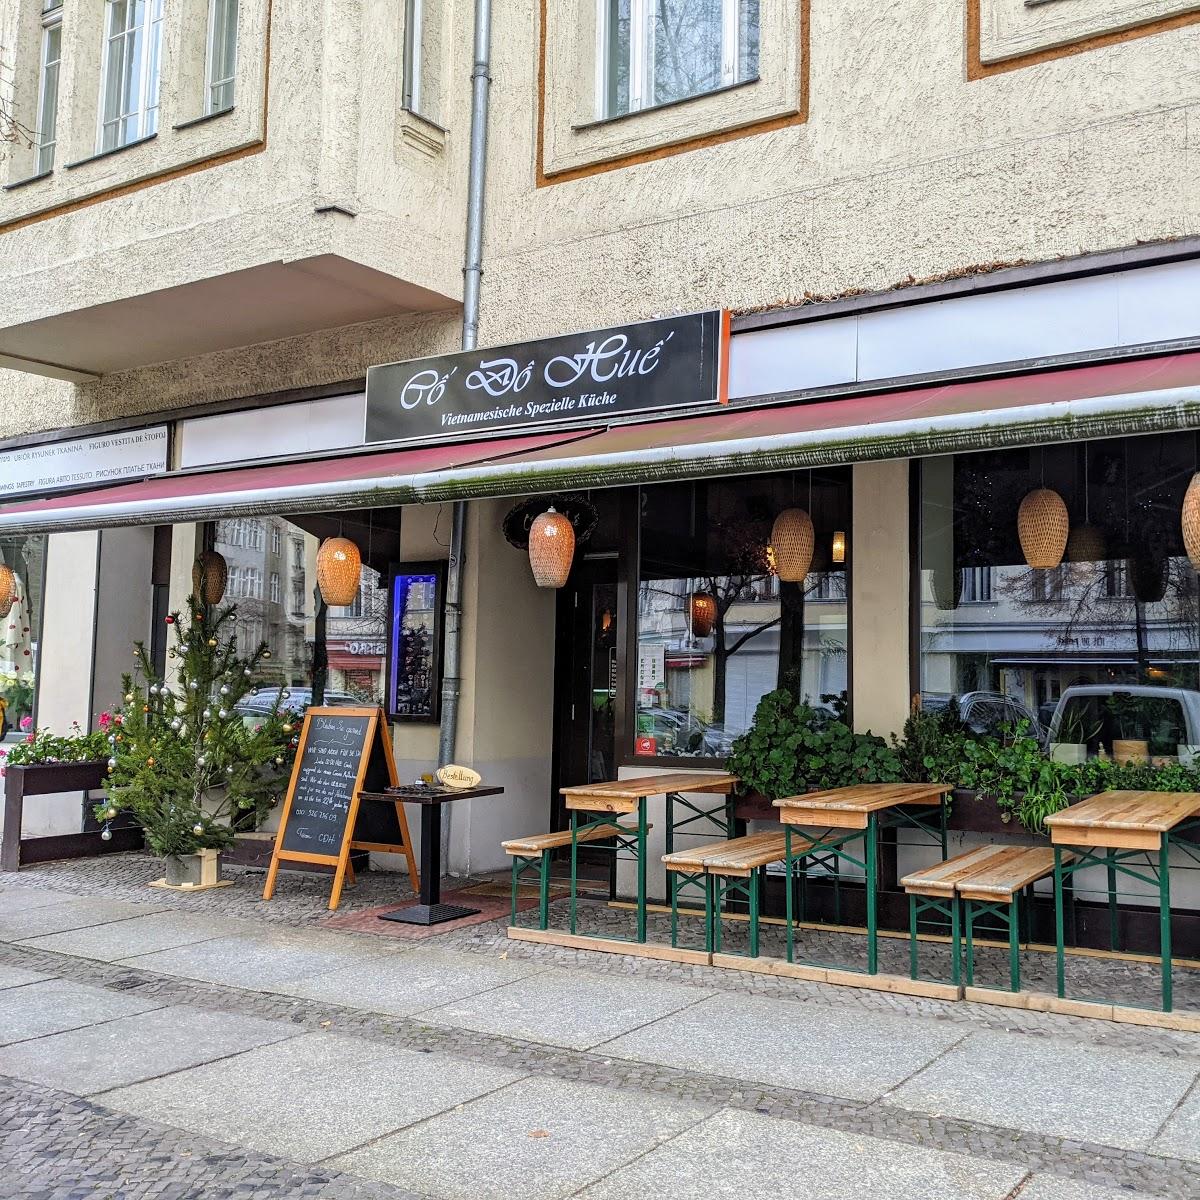 Restaurant "Co Do Hue" in Berlin